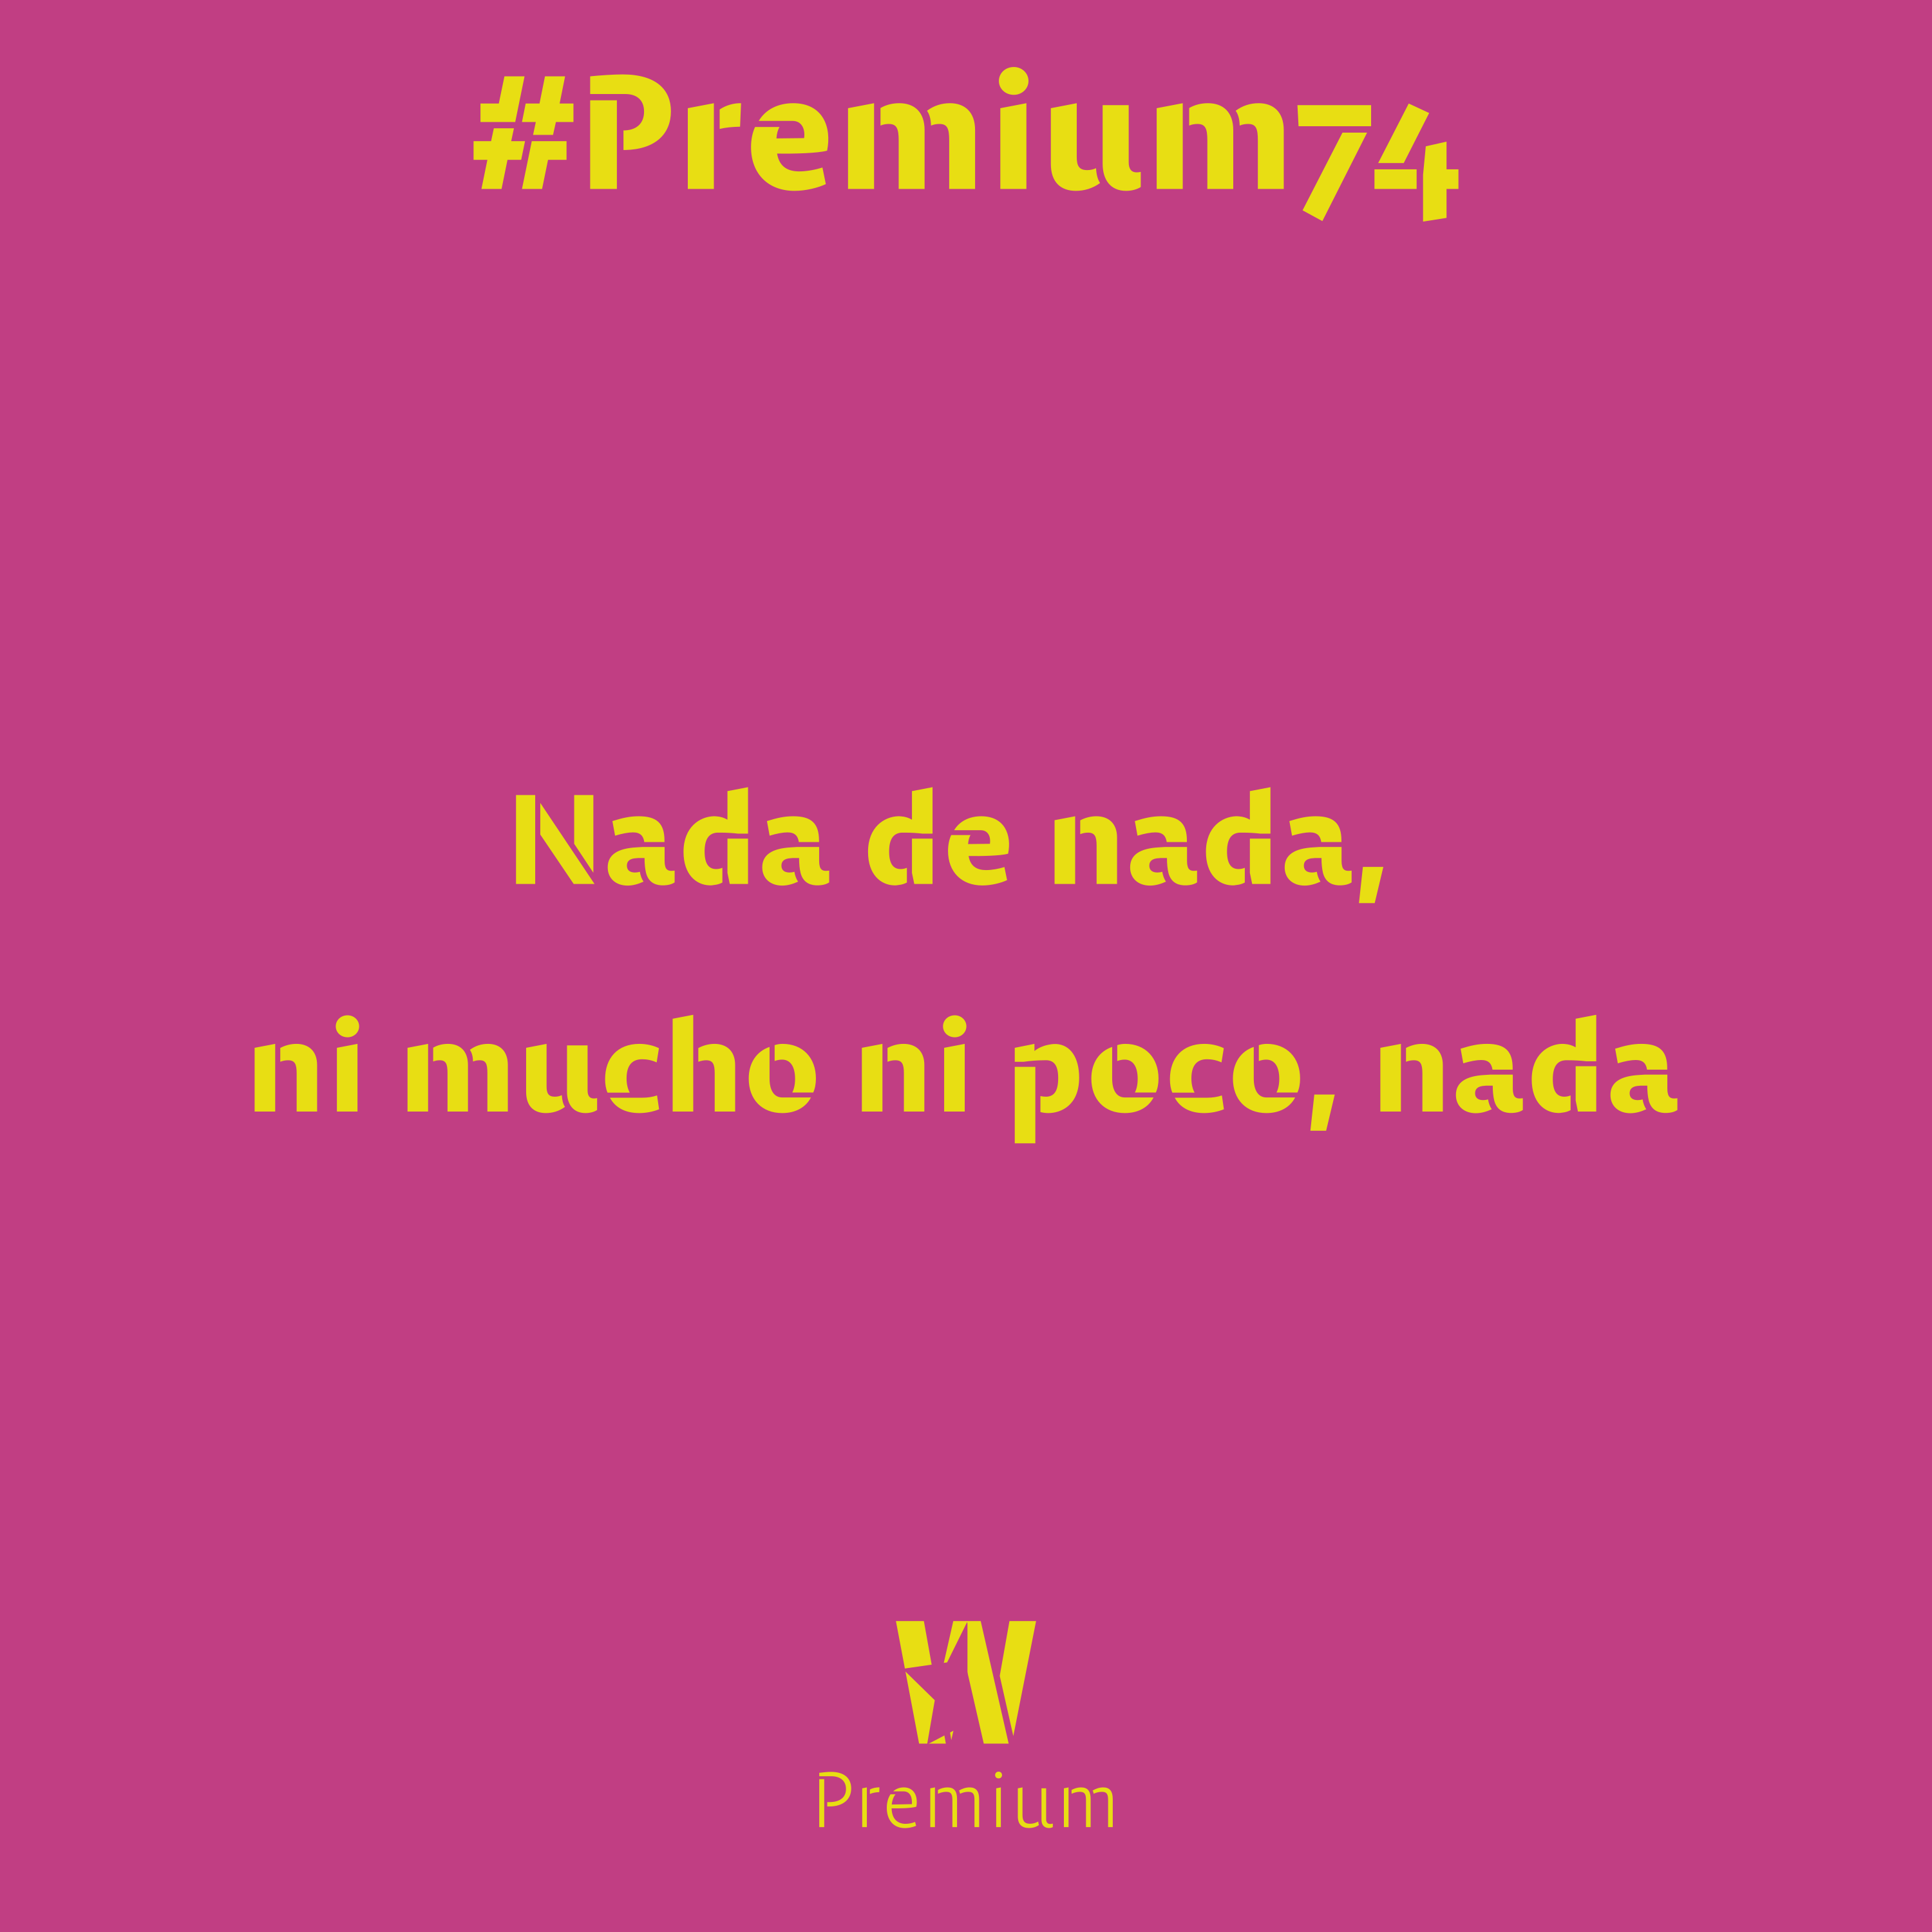 #Premium74 - Nada de nada, ni mucho ni poco, nada